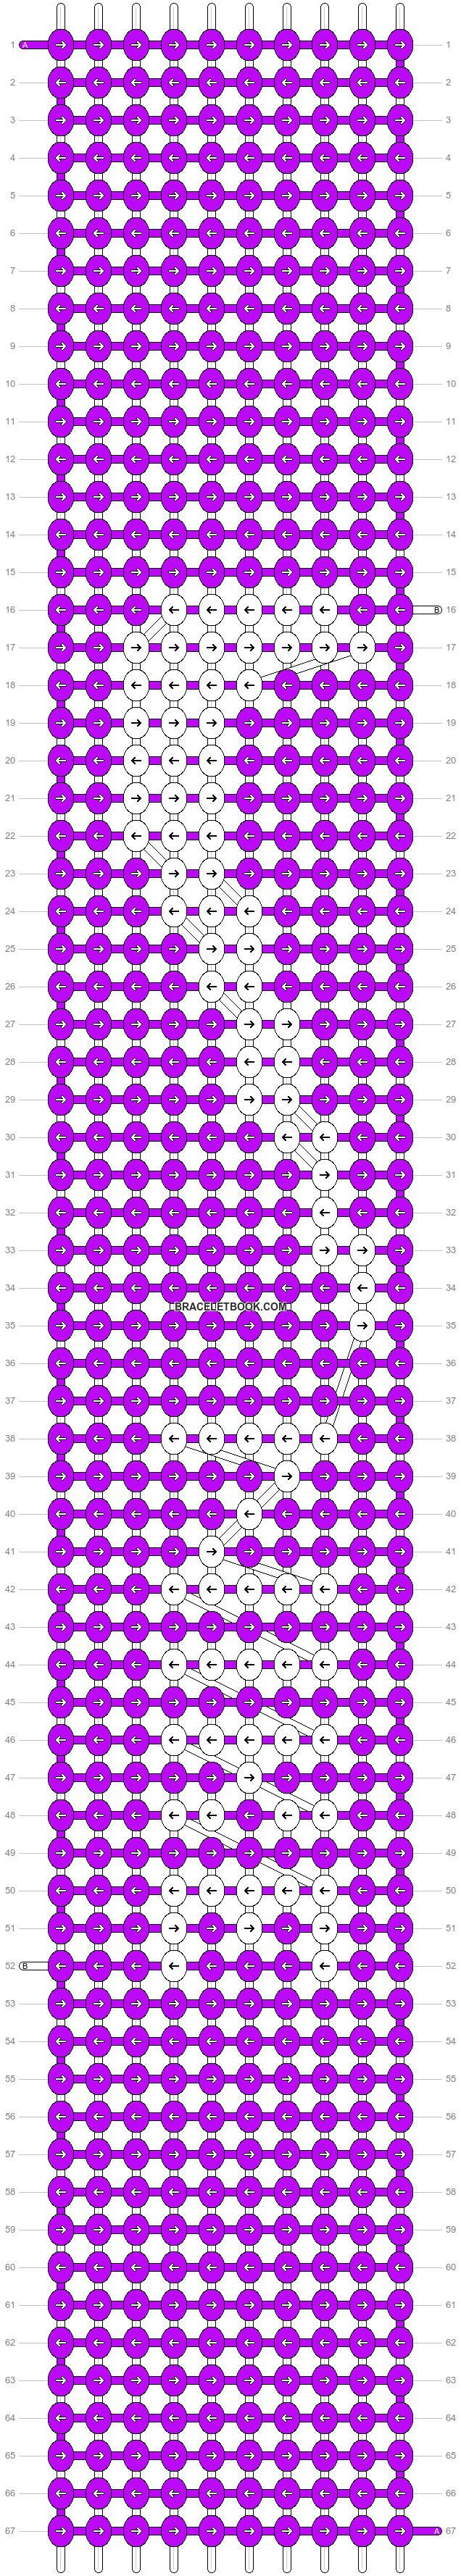 Alpha pattern #20936 variation #46057 pattern